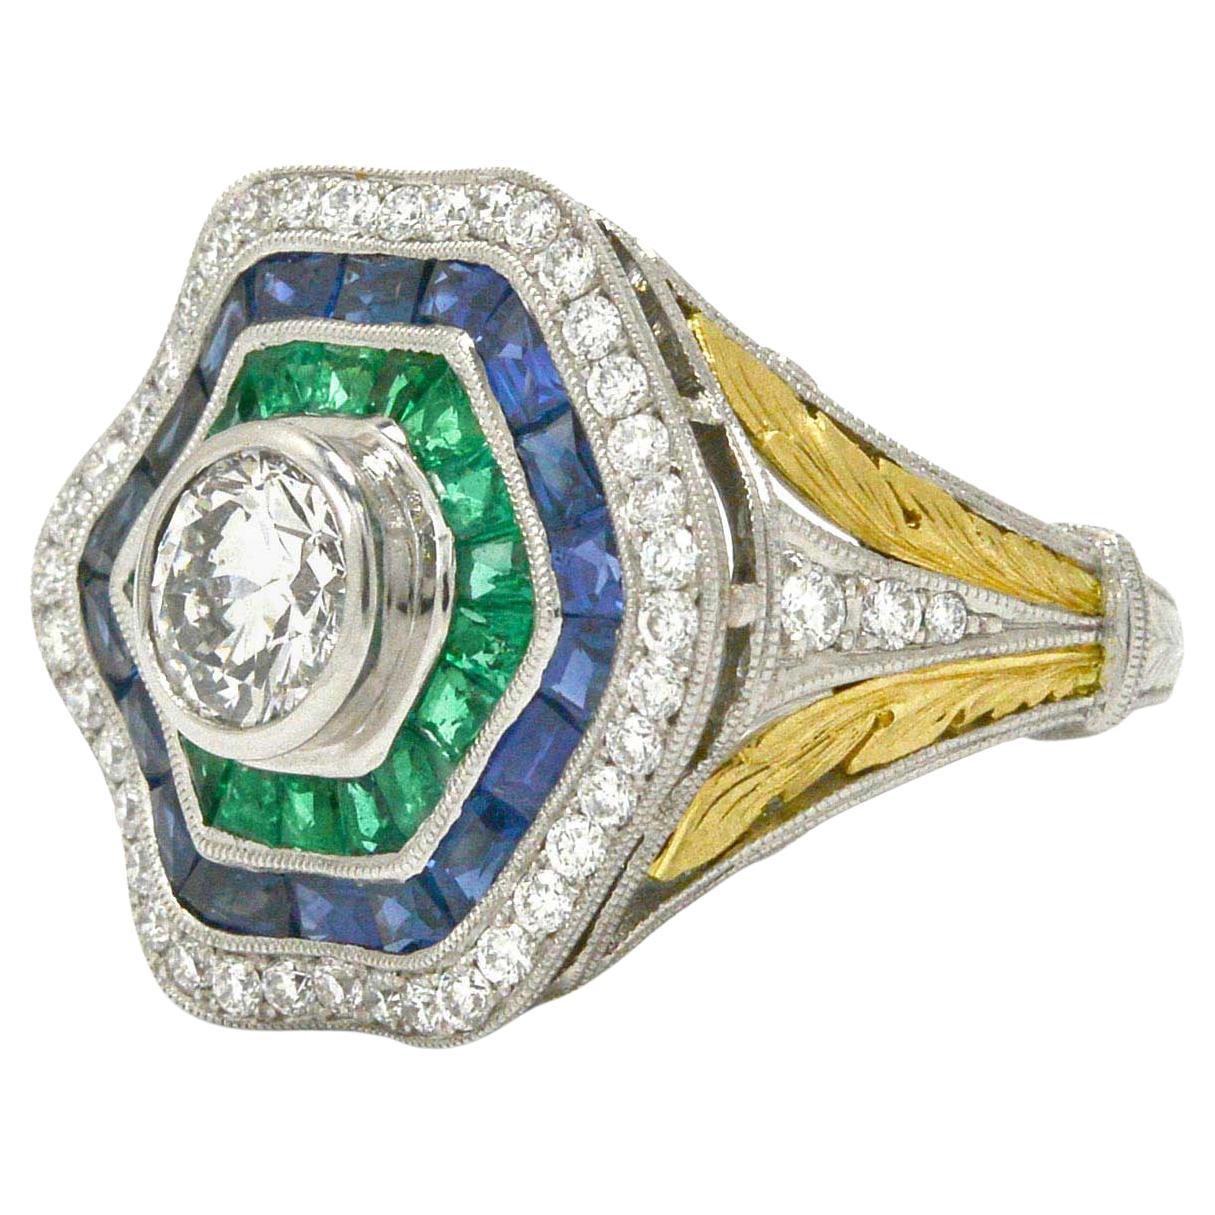 4.35 Carat Diamond Sapphire Emerald Ballerina Ring EGL Certified